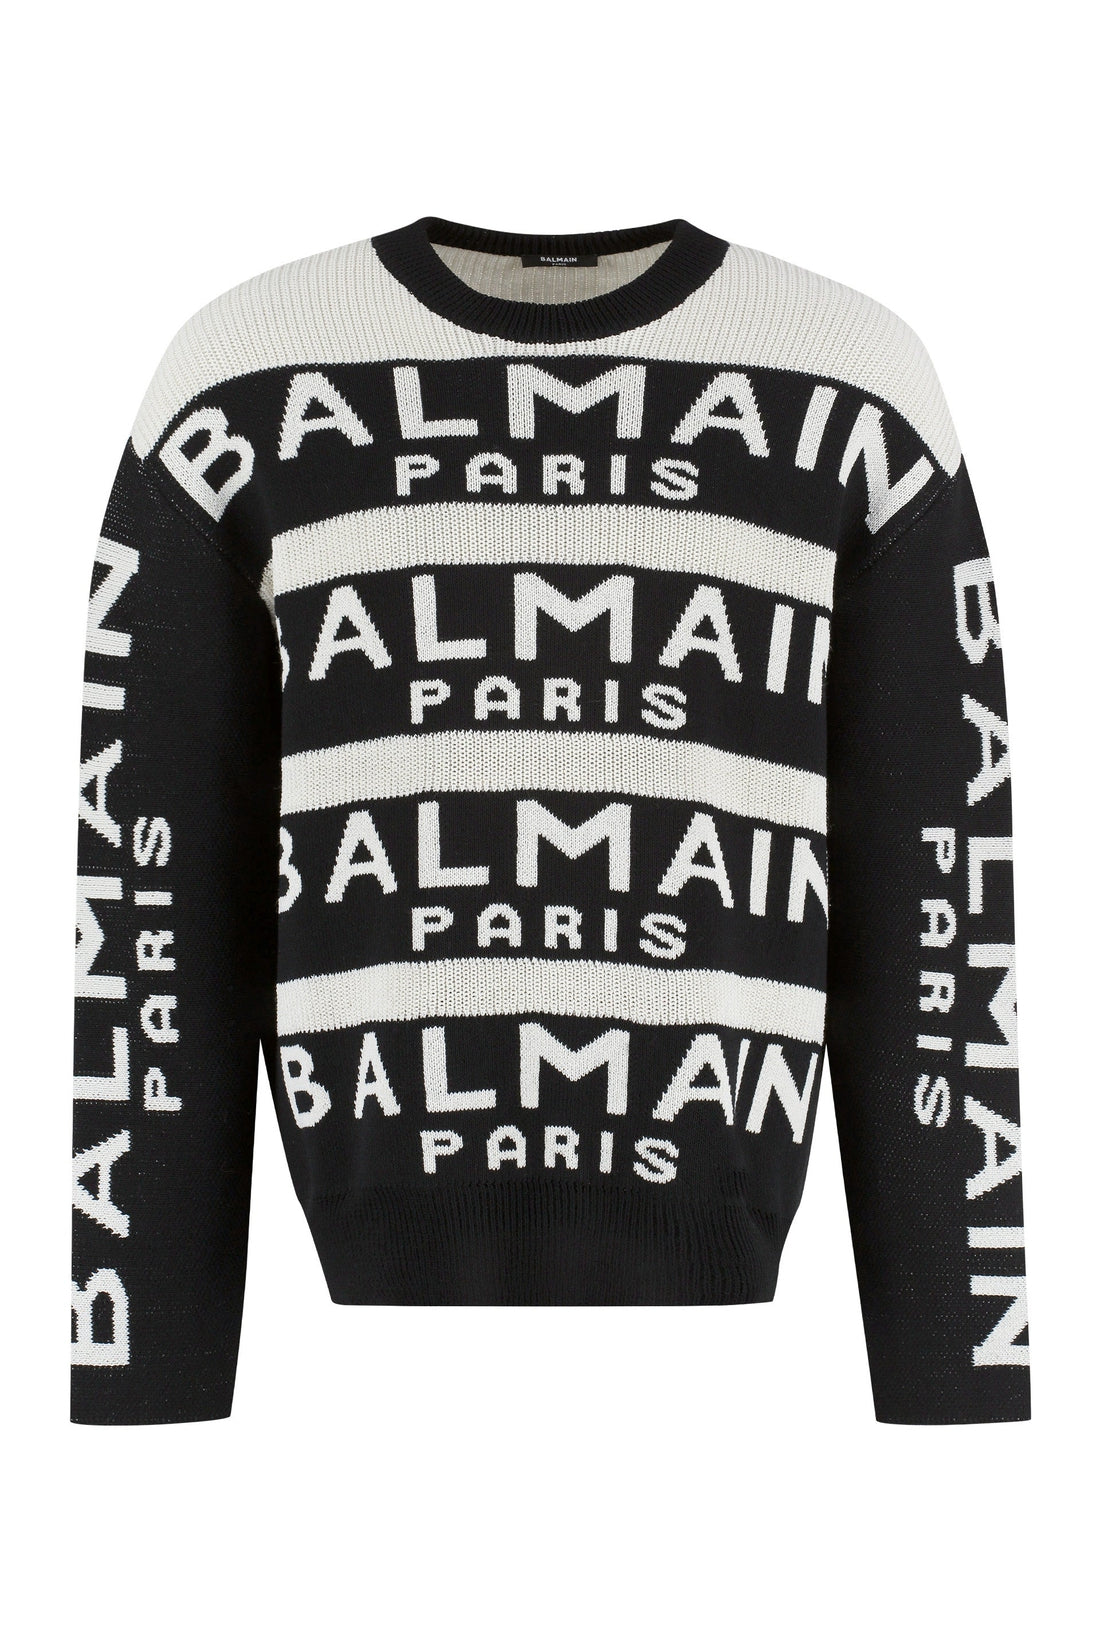 Balmain-OUTLET-SALE-Jacquard wool sweater-ARCHIVIST